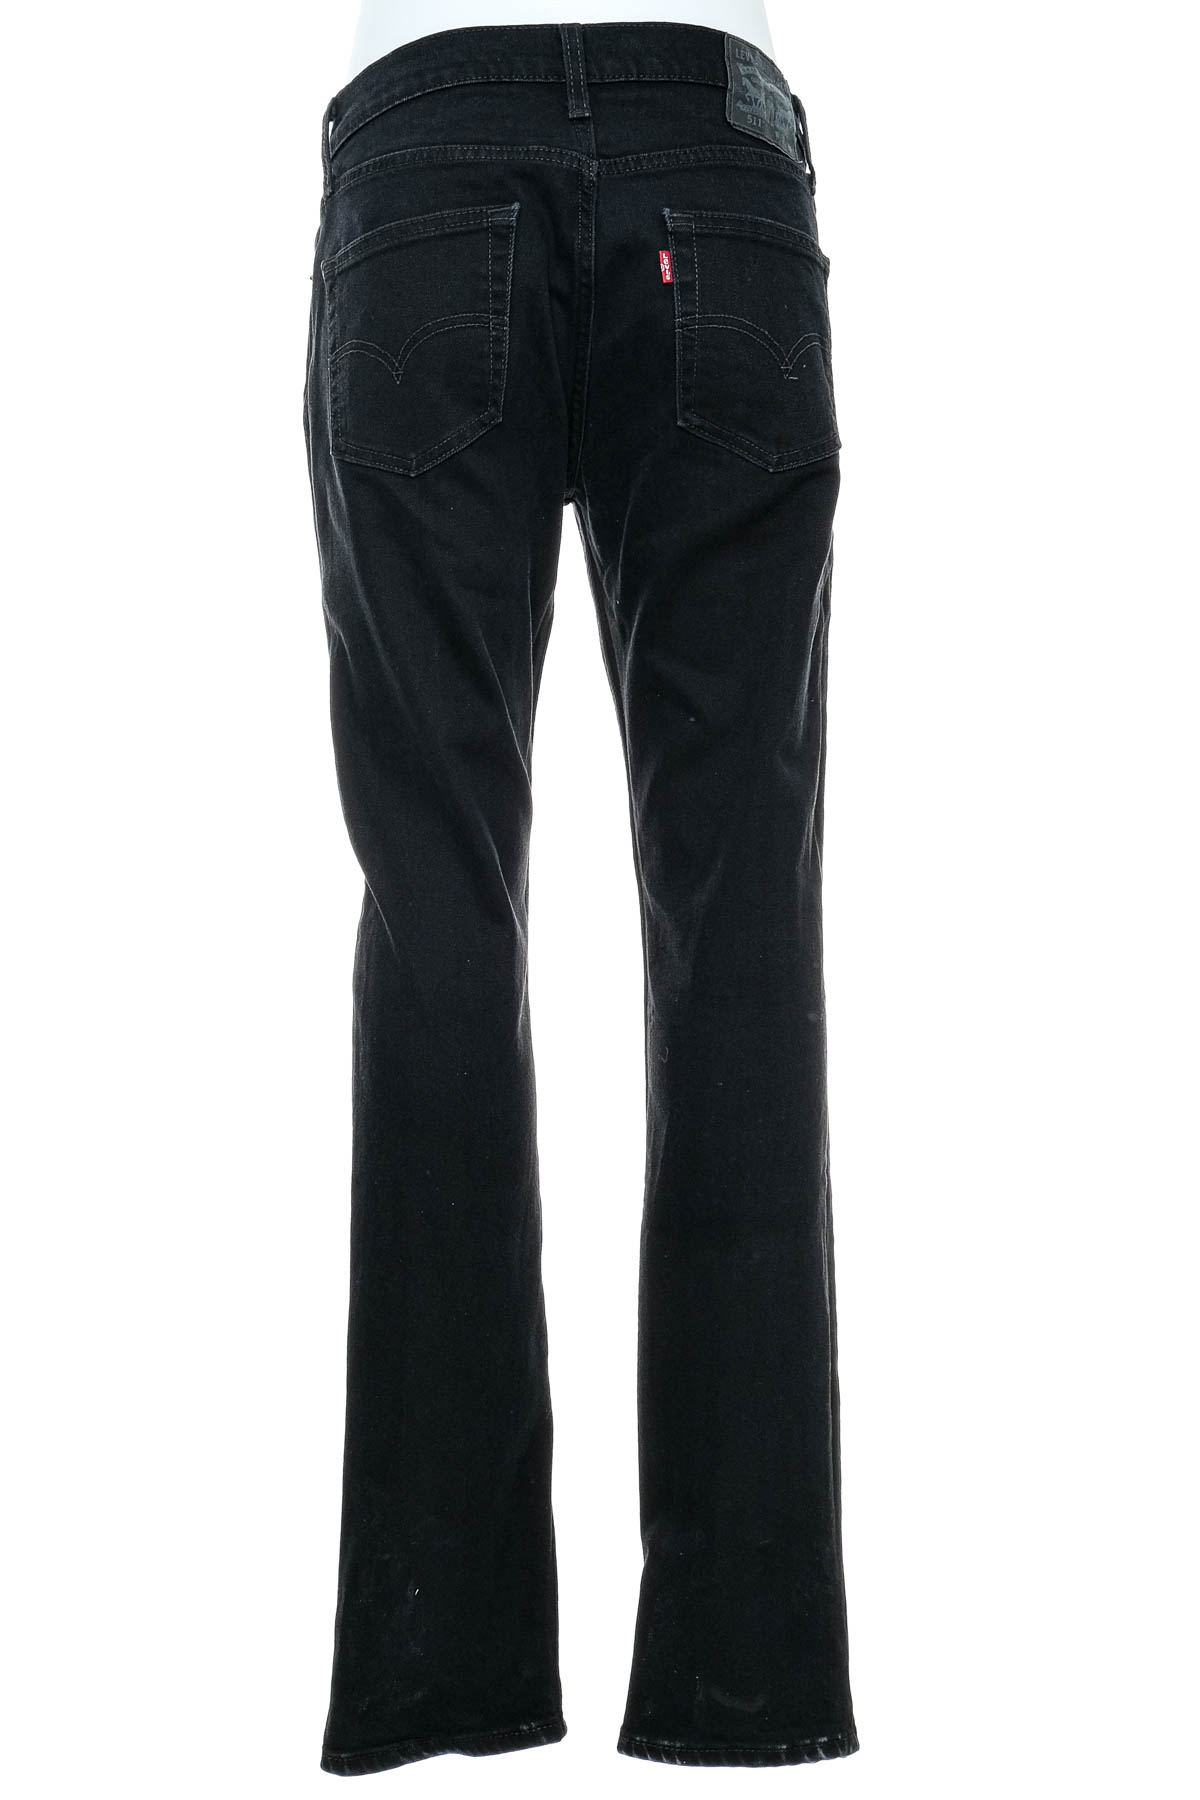 Men's jeans - Levi Strauss & Co. - 1